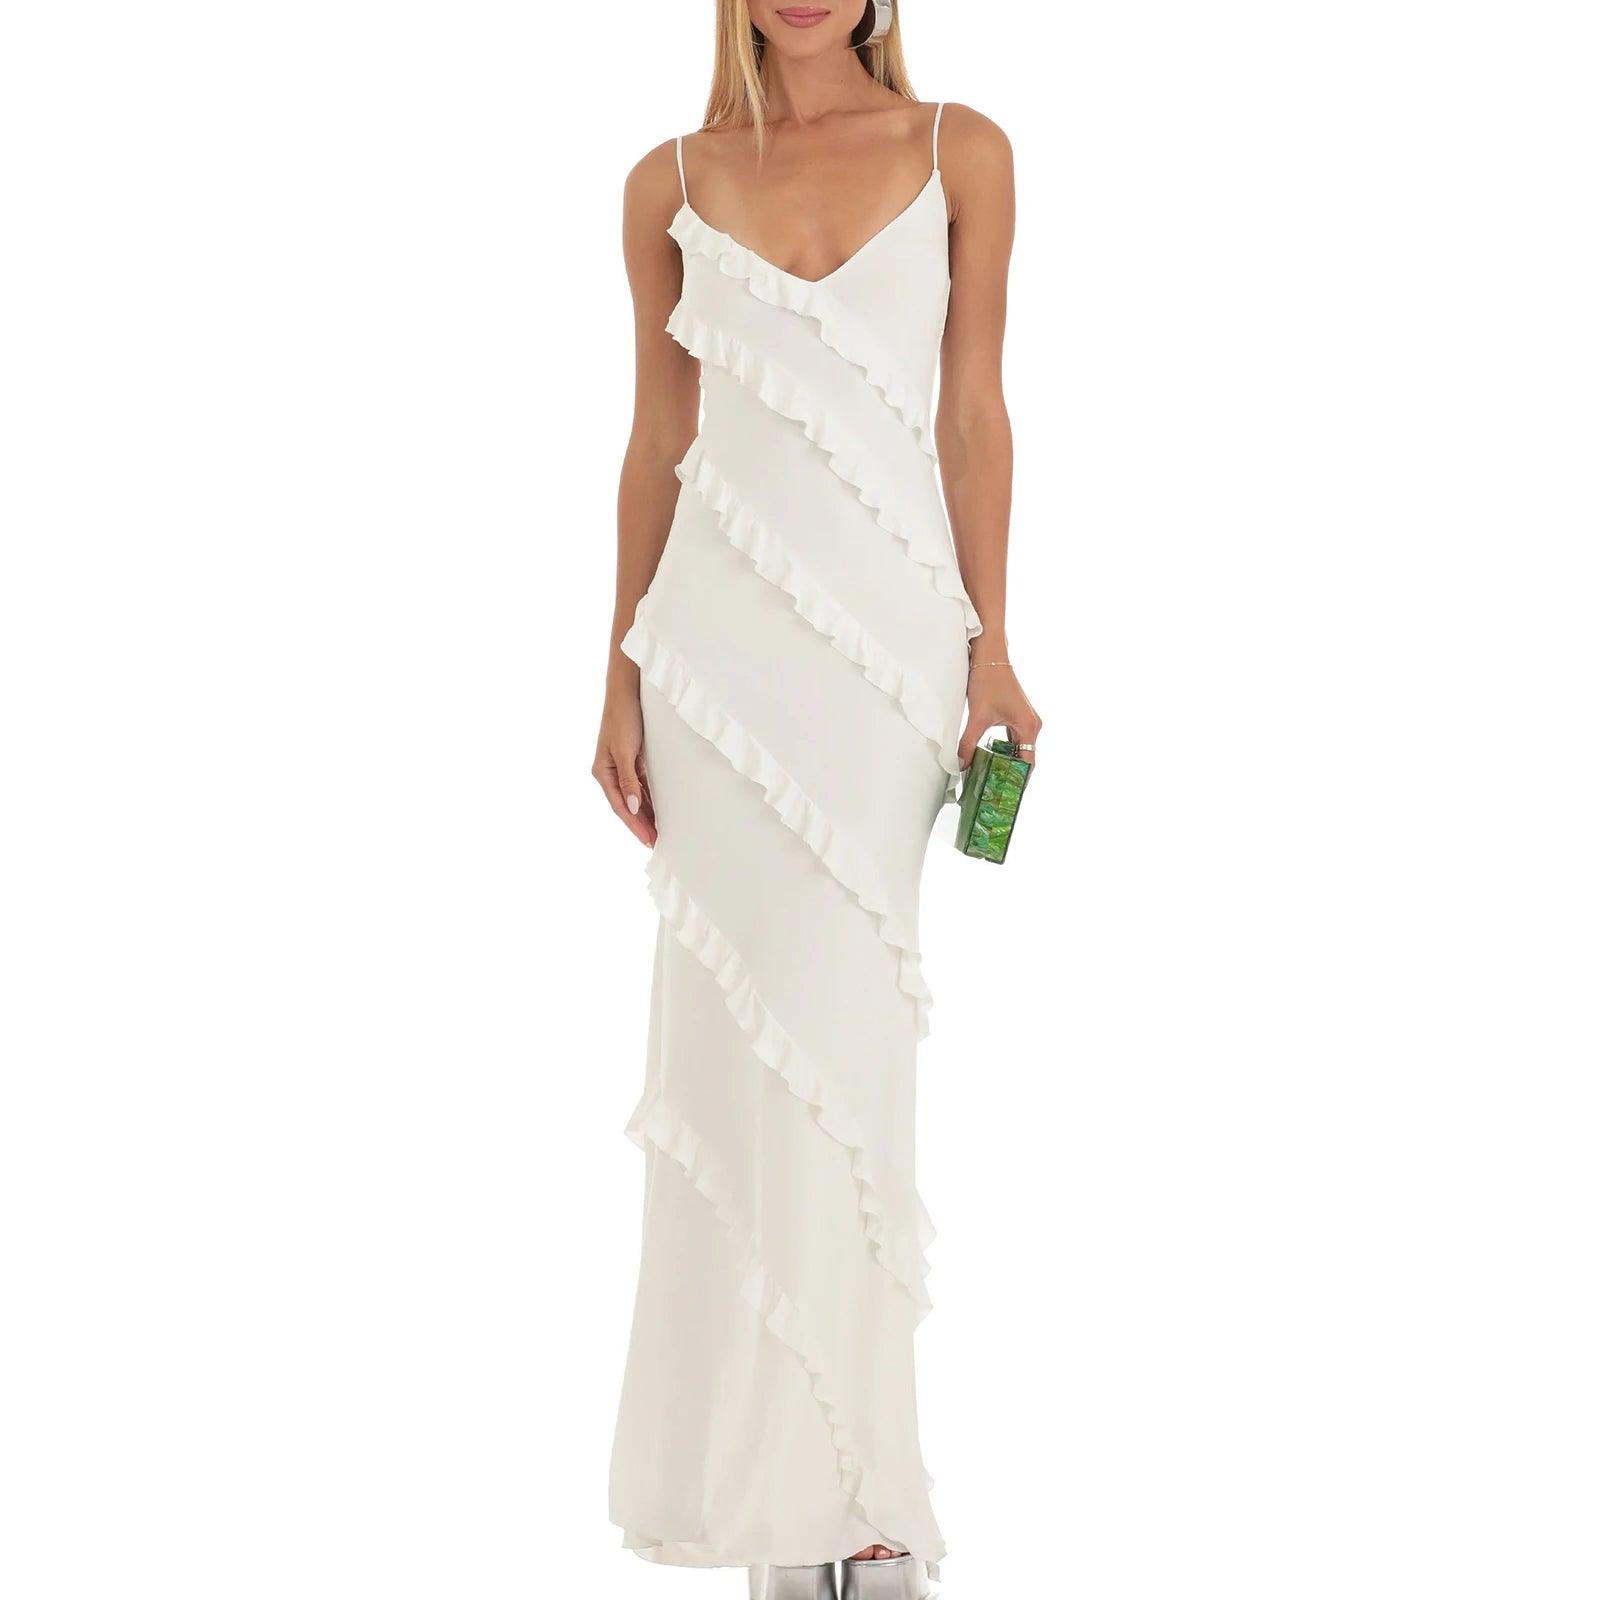 Robin Ruffles Backless Dress - White